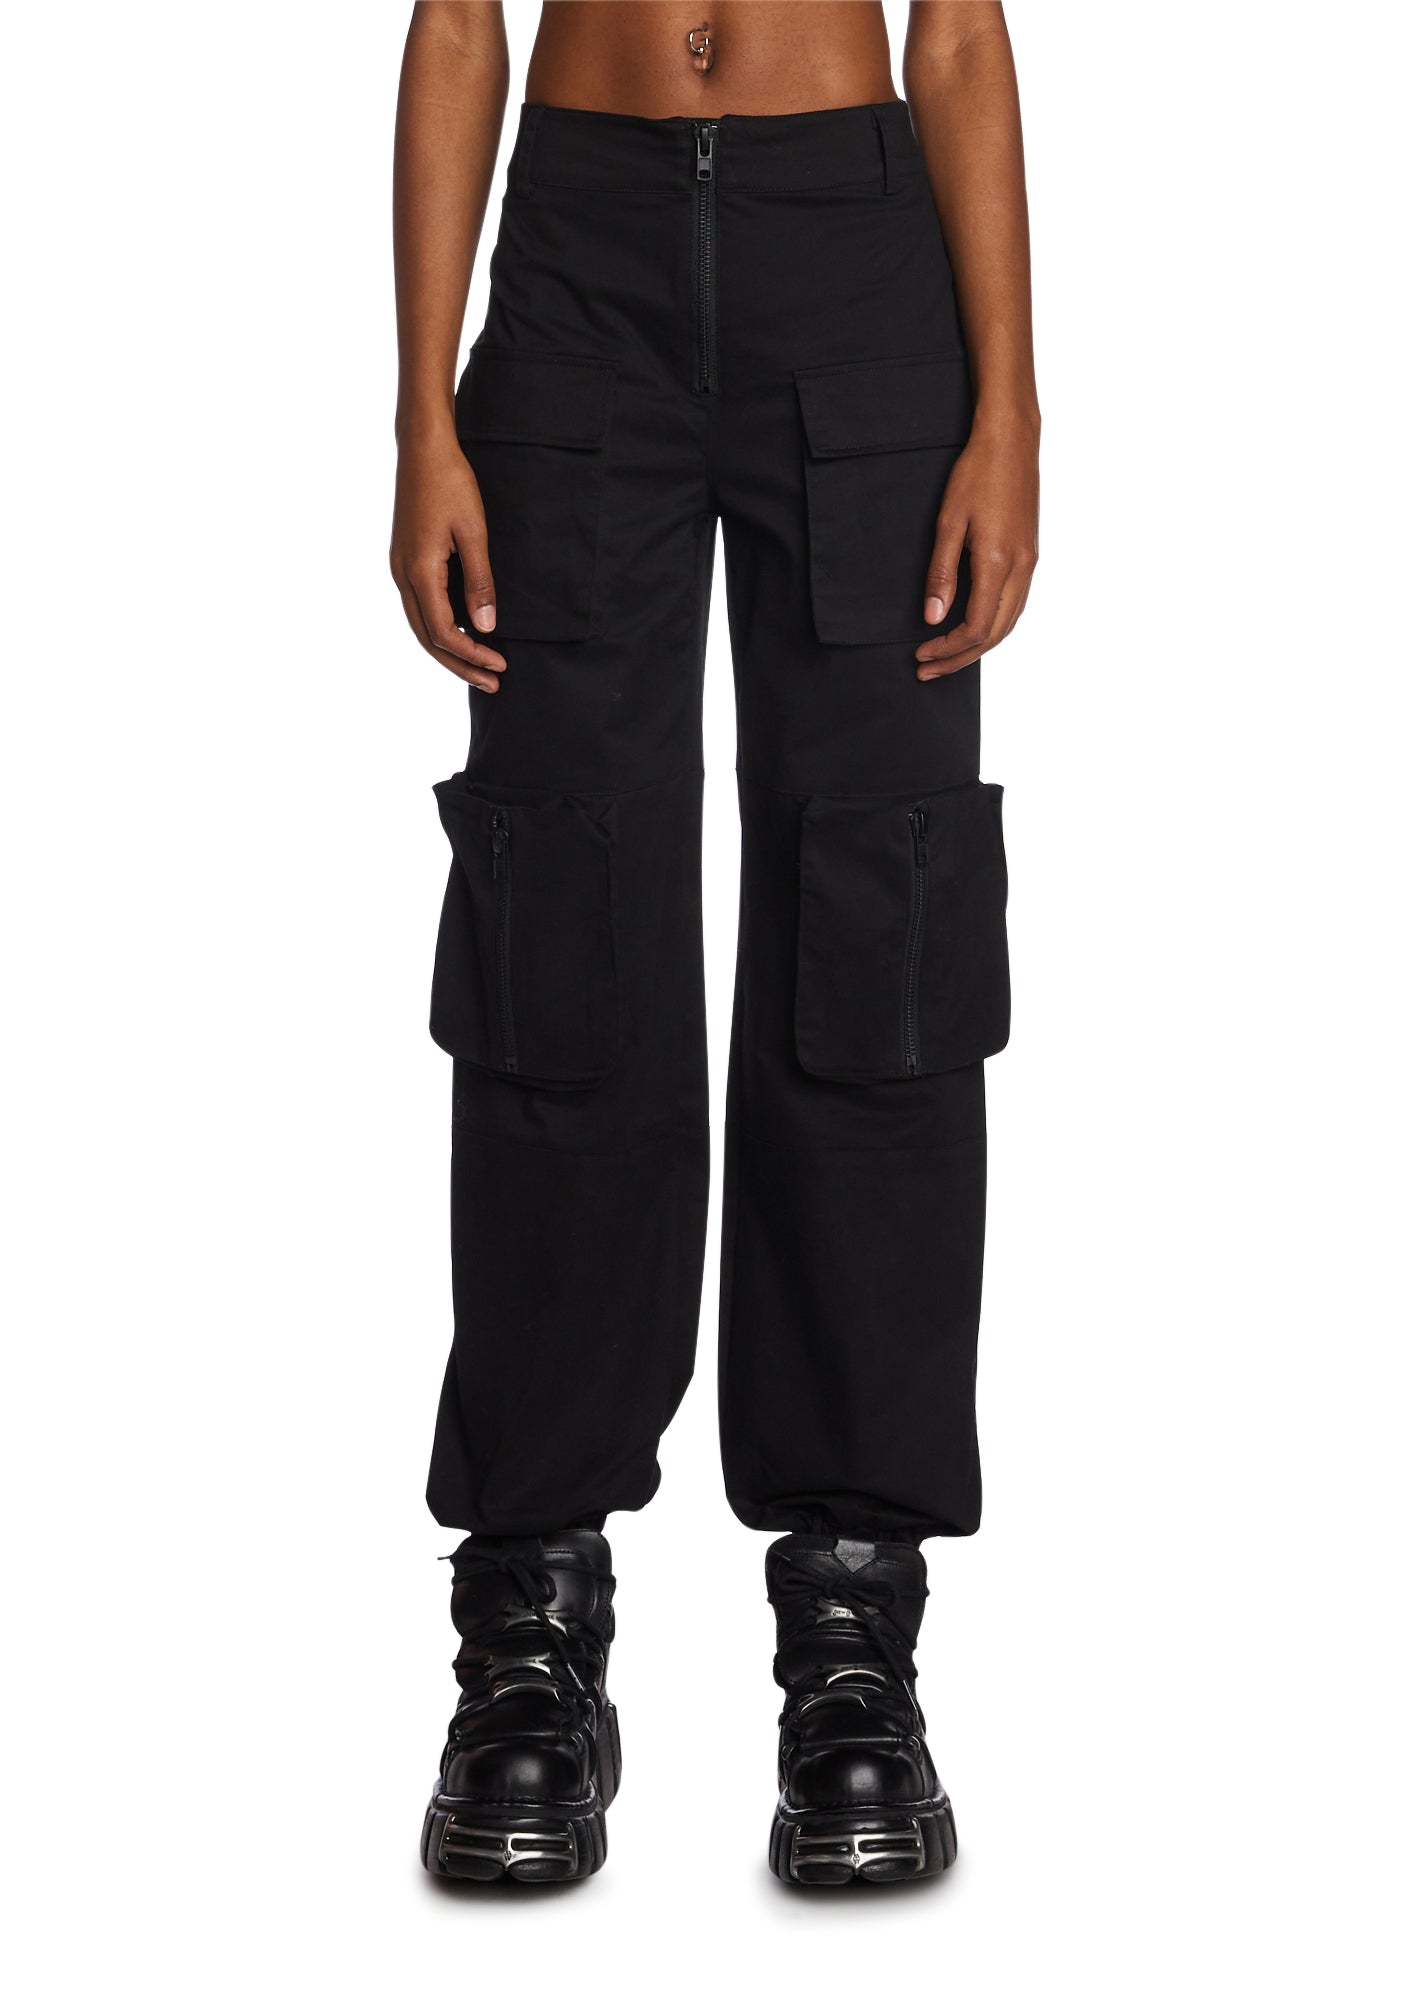 Poster Grl Multi Pocket Cargo Pants - Black – Dolls Kill, black cargo jeans